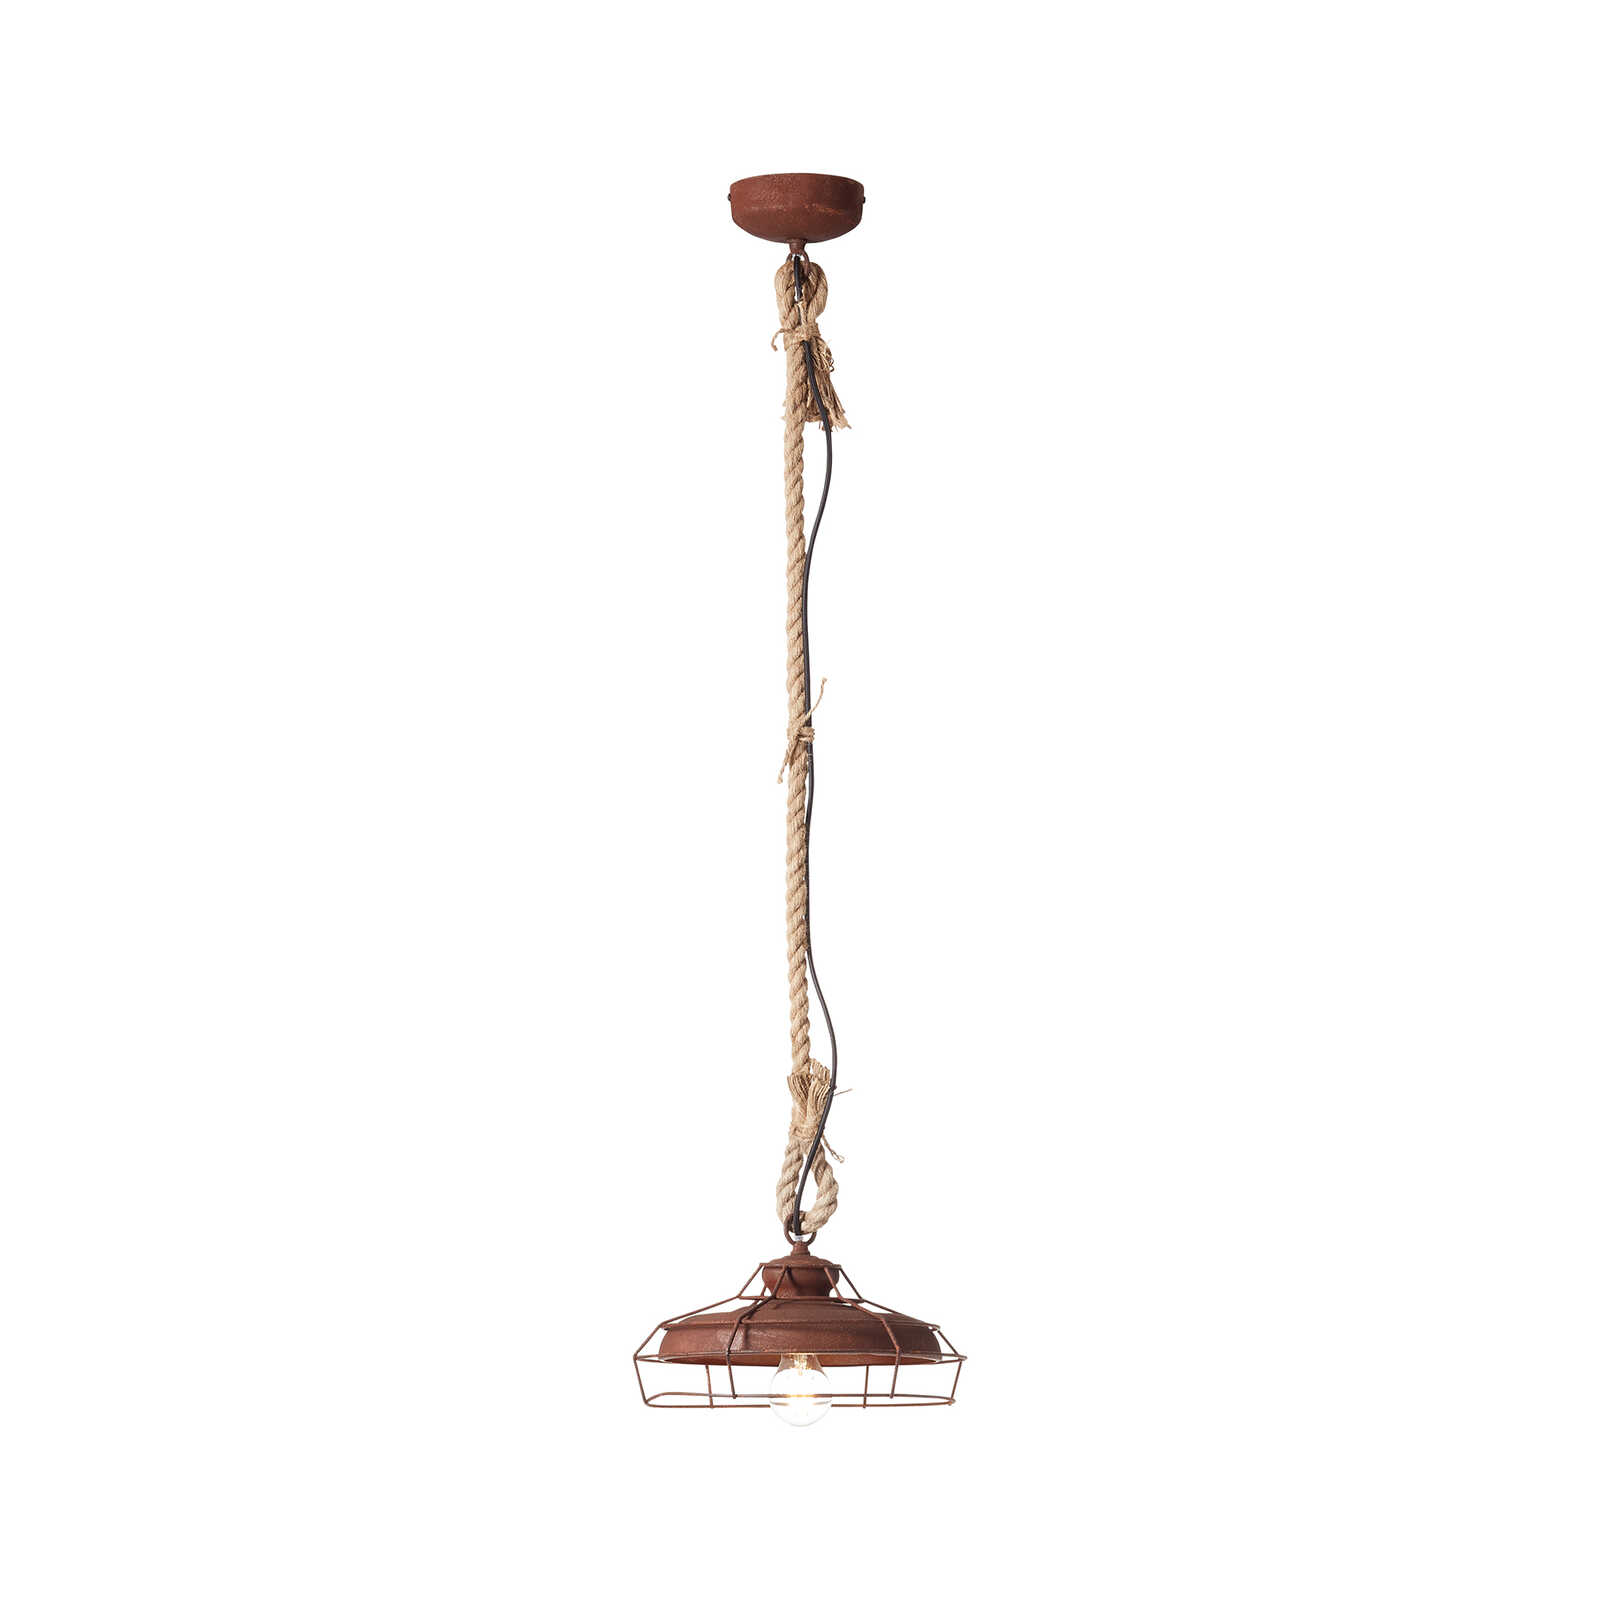 Metalen hanglamp - Malina - Bruin
